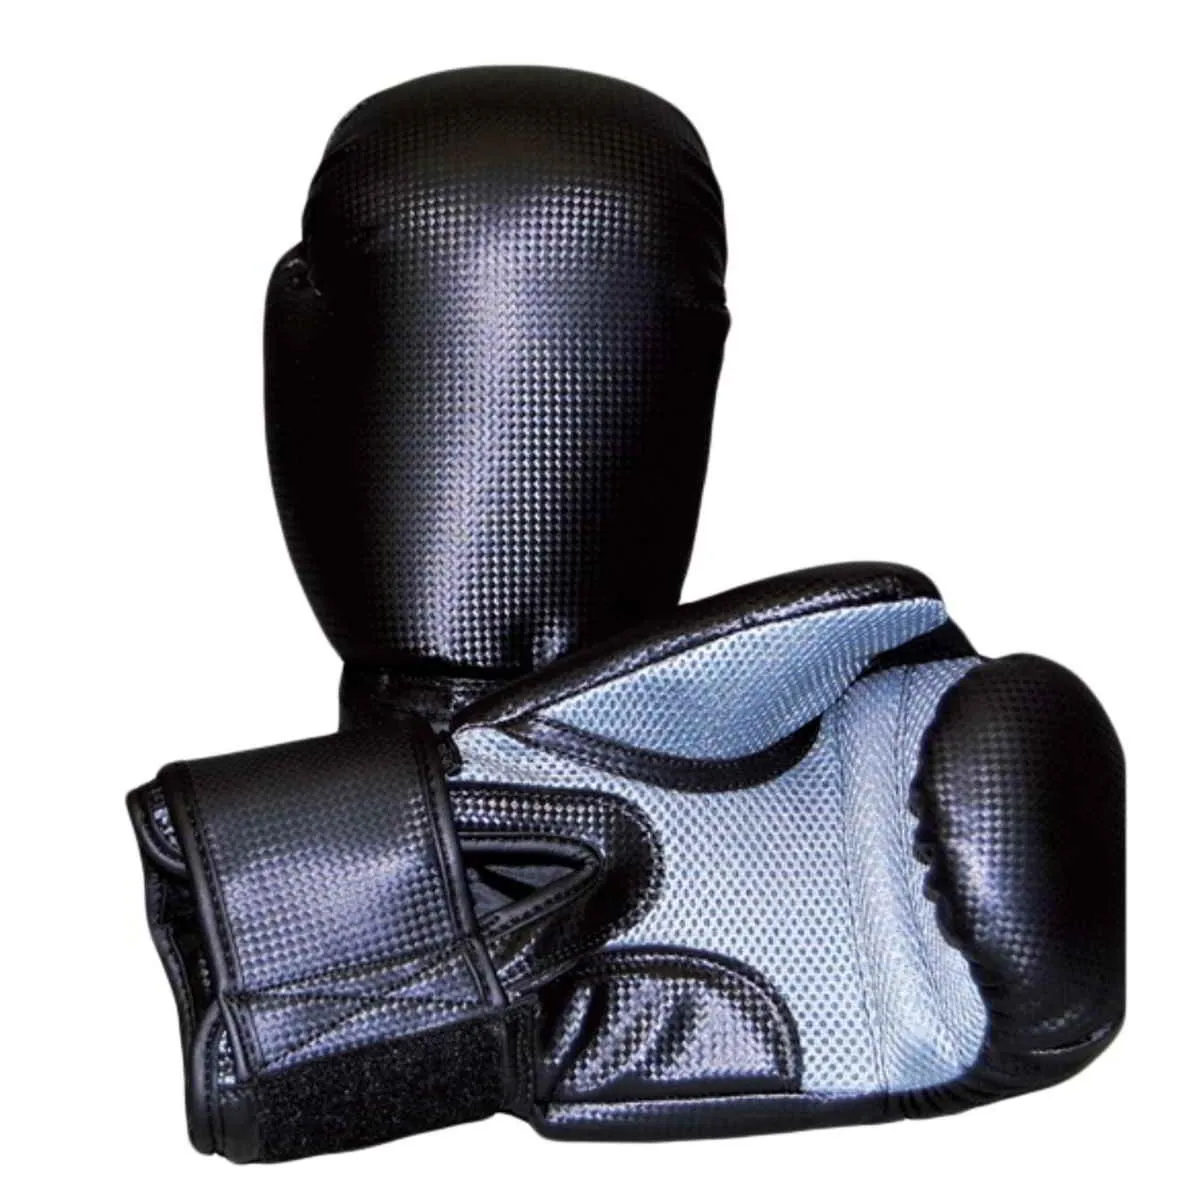 Boxing gloves black carbon mesh